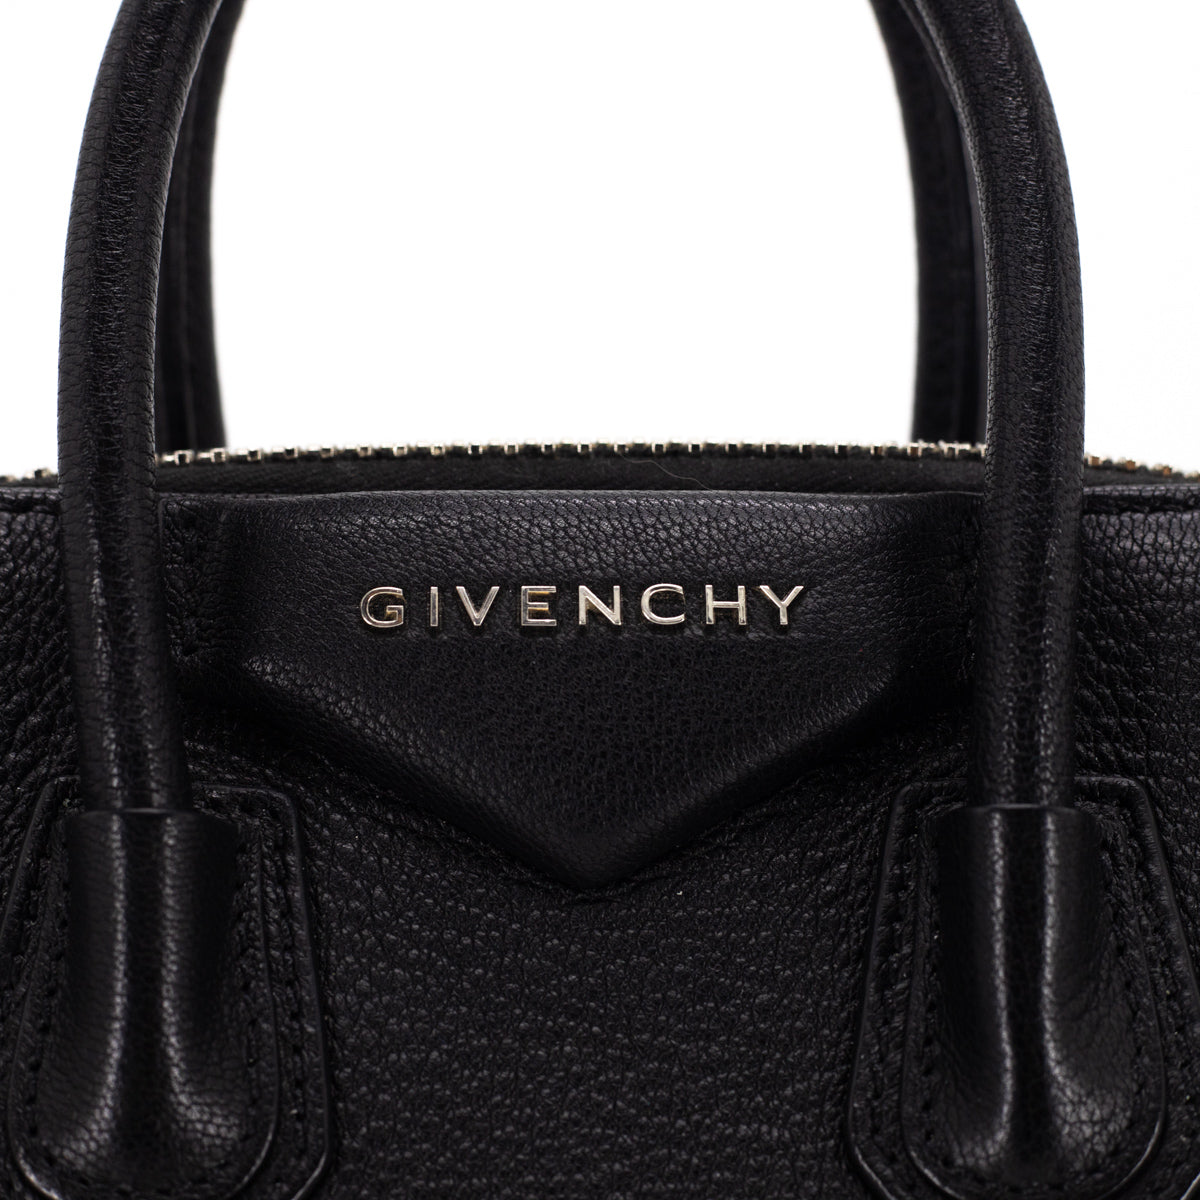 Givenchy Antigona Mini Black | Secondhand Givenchy Bags - THE PURSE AFFAIR